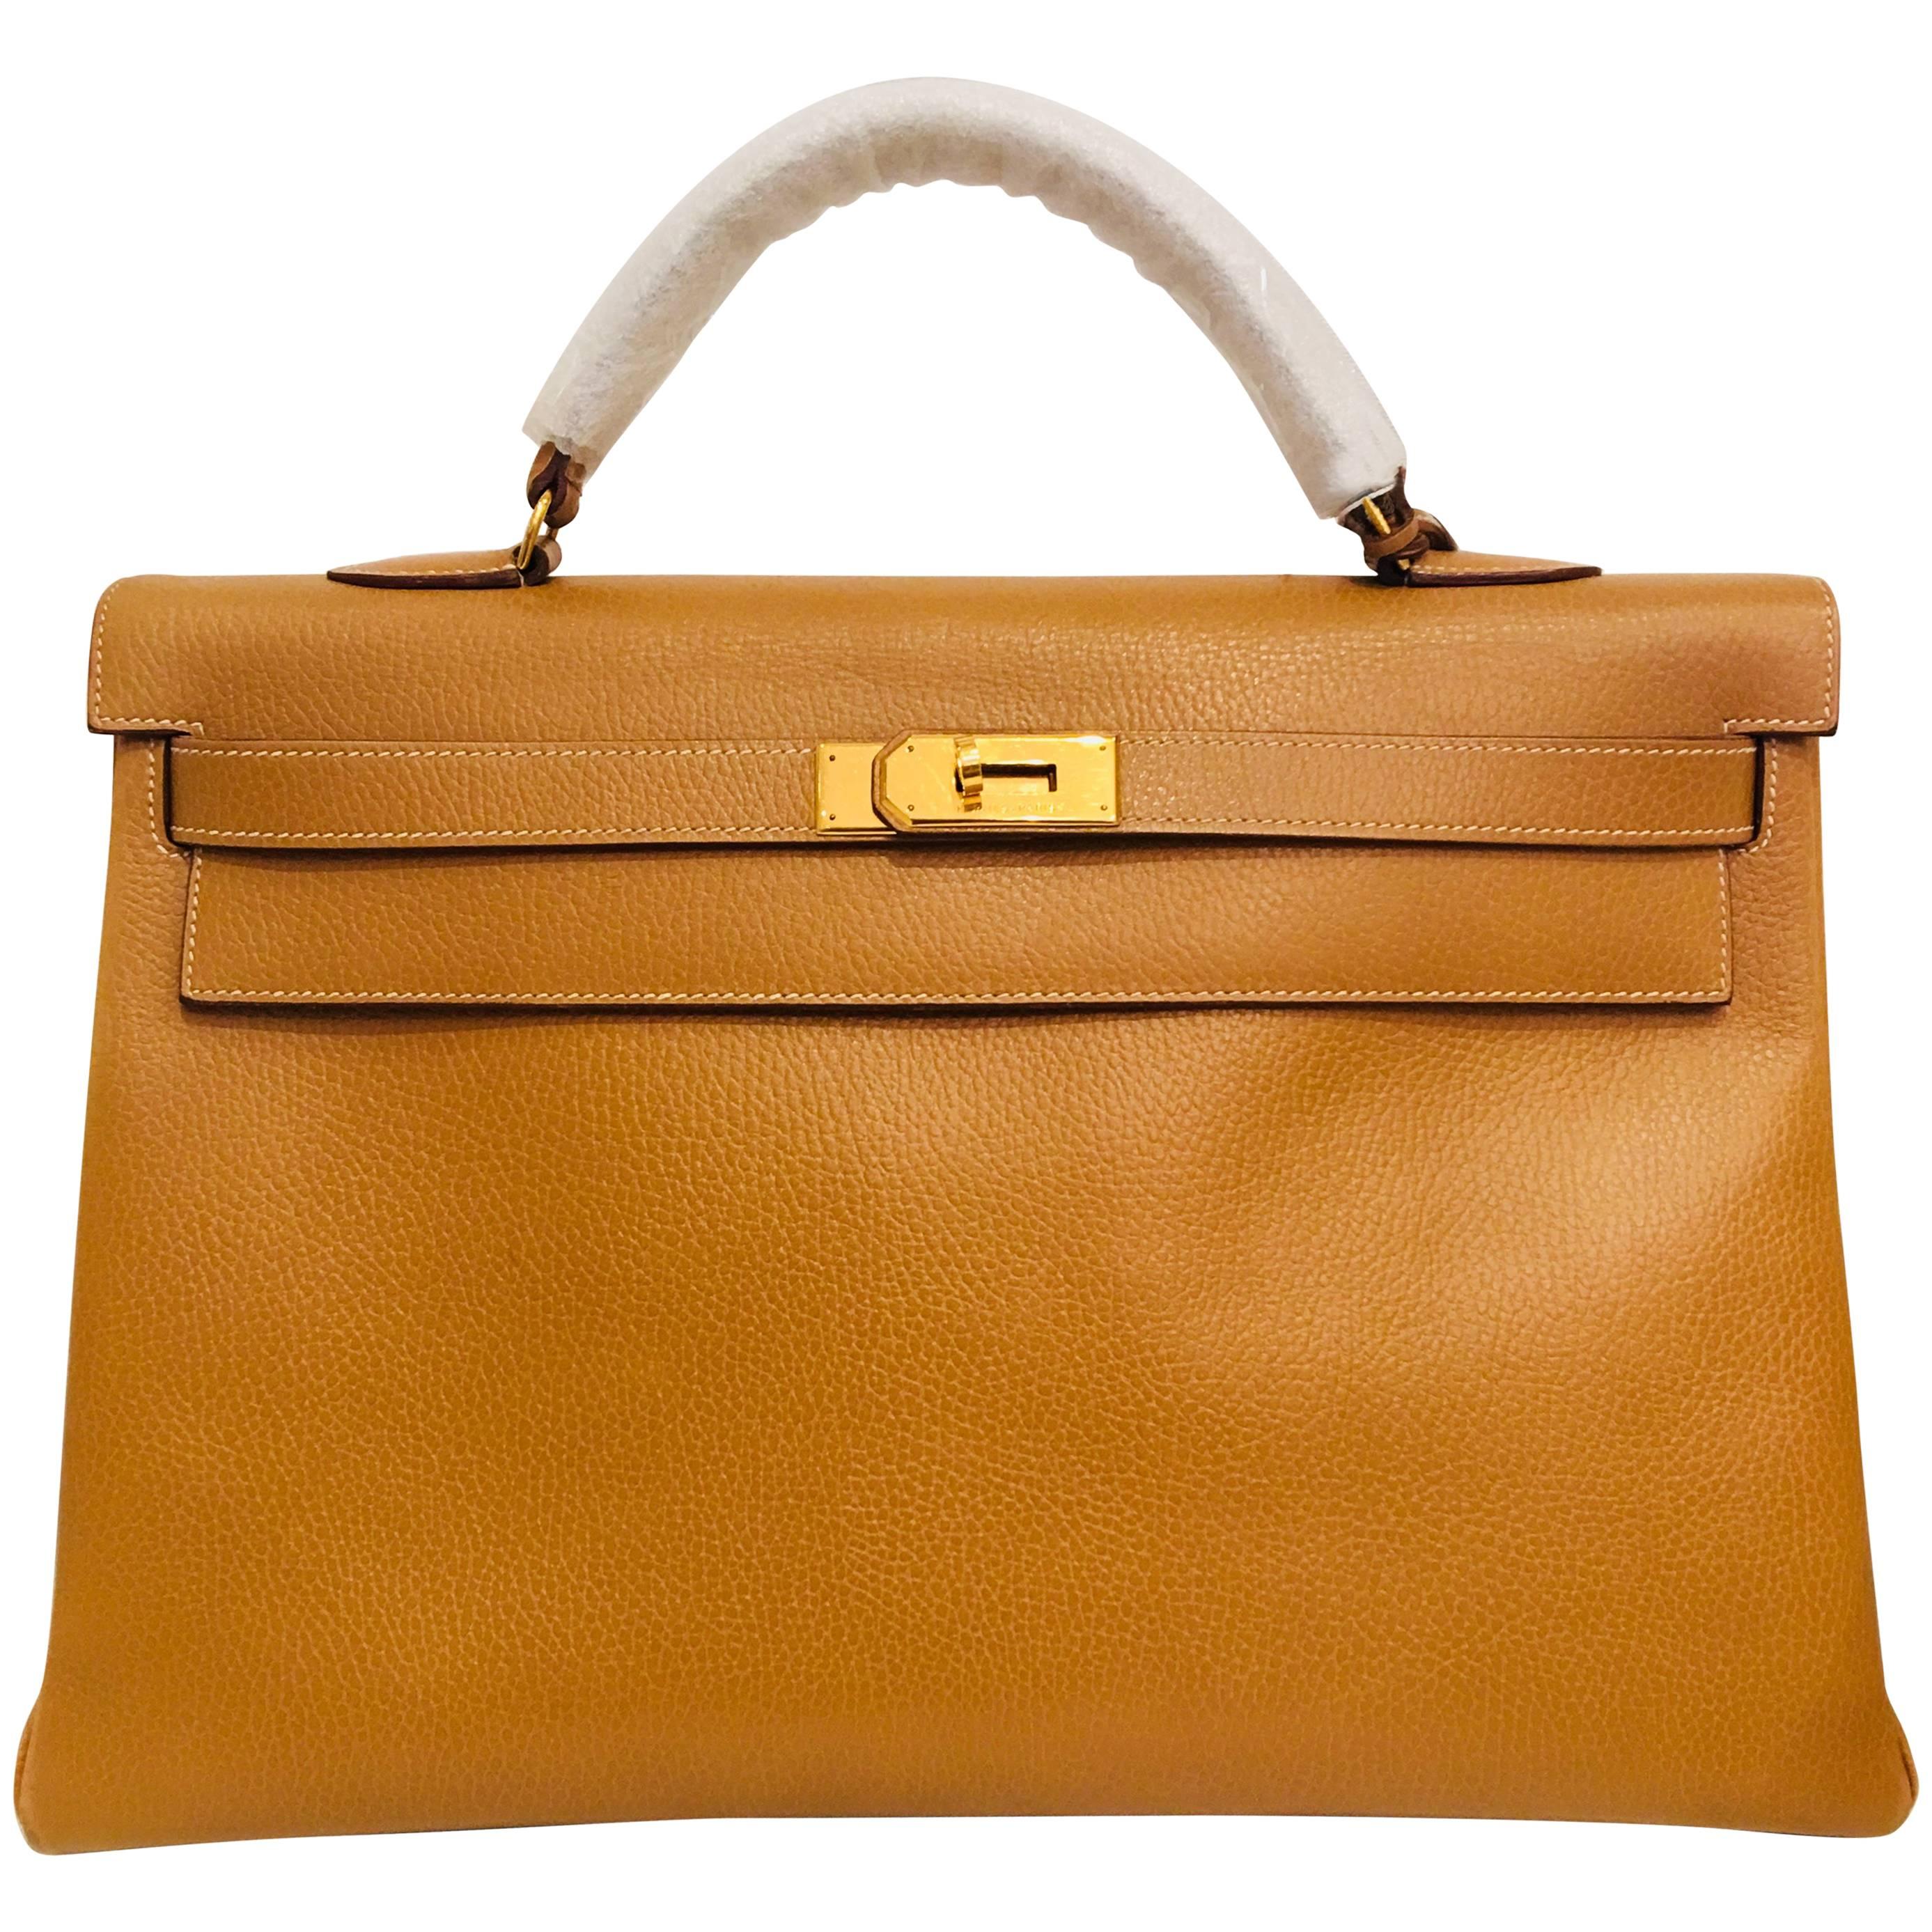 Hermés Gold Leather Kelly Bag